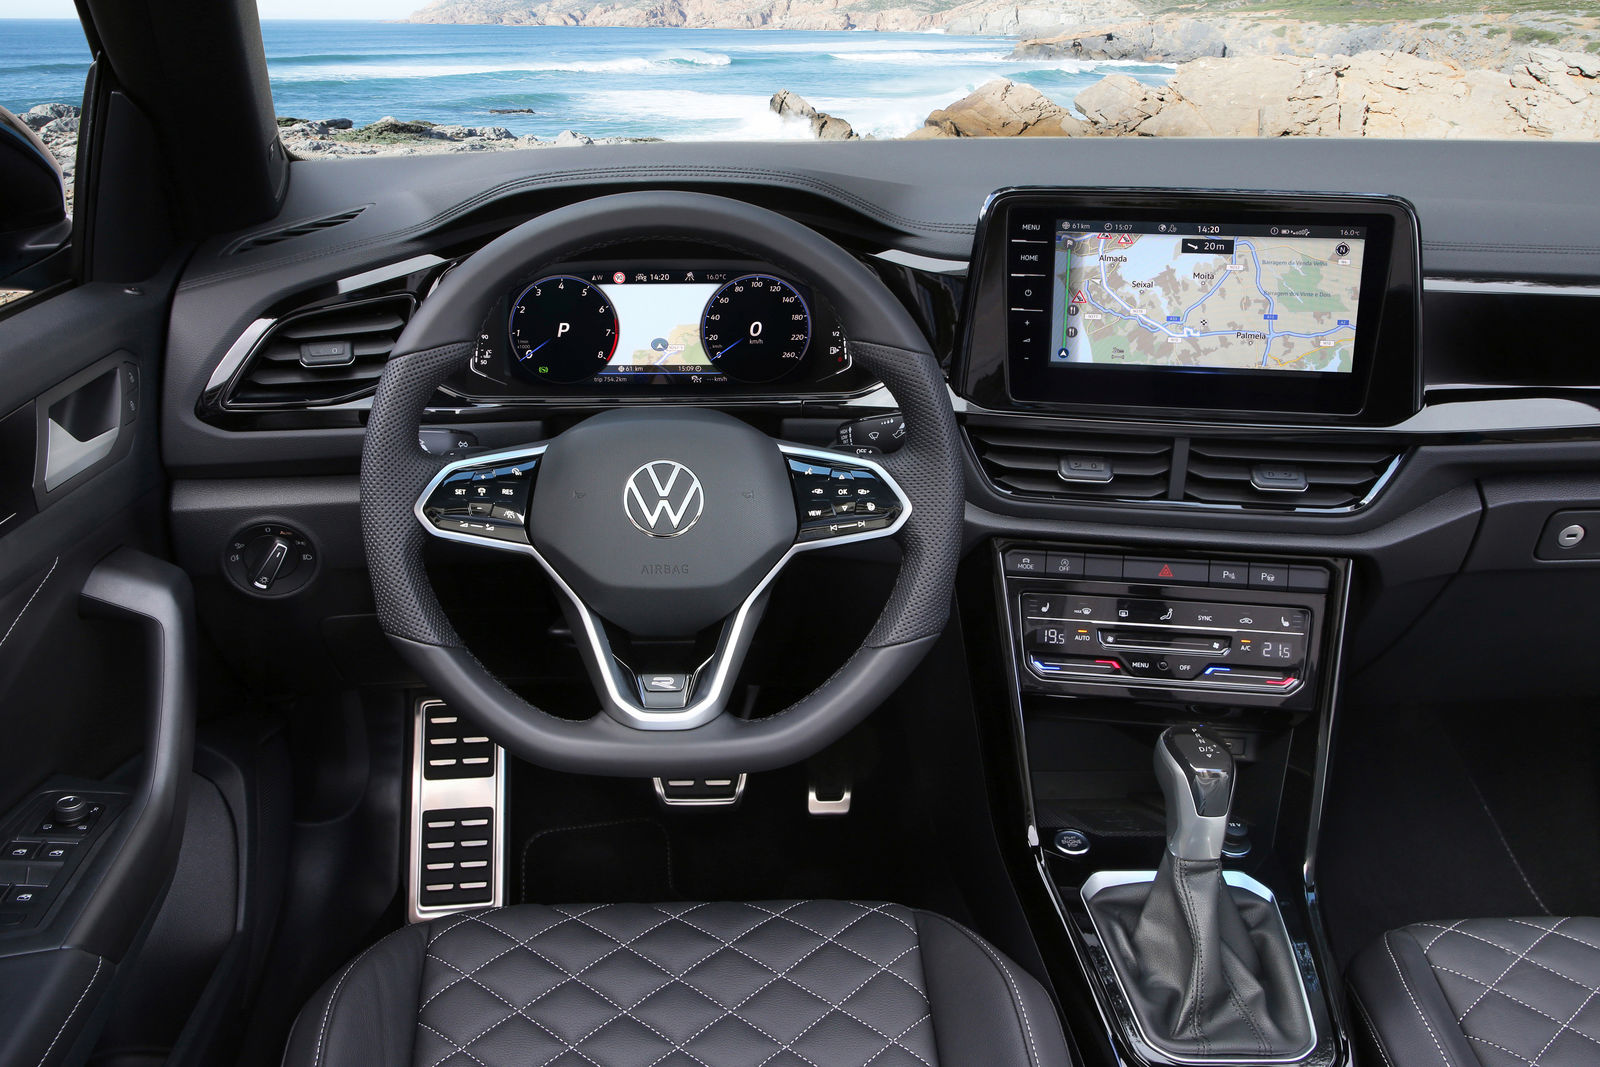 The new Volkswagen T-Roc Cabriolet